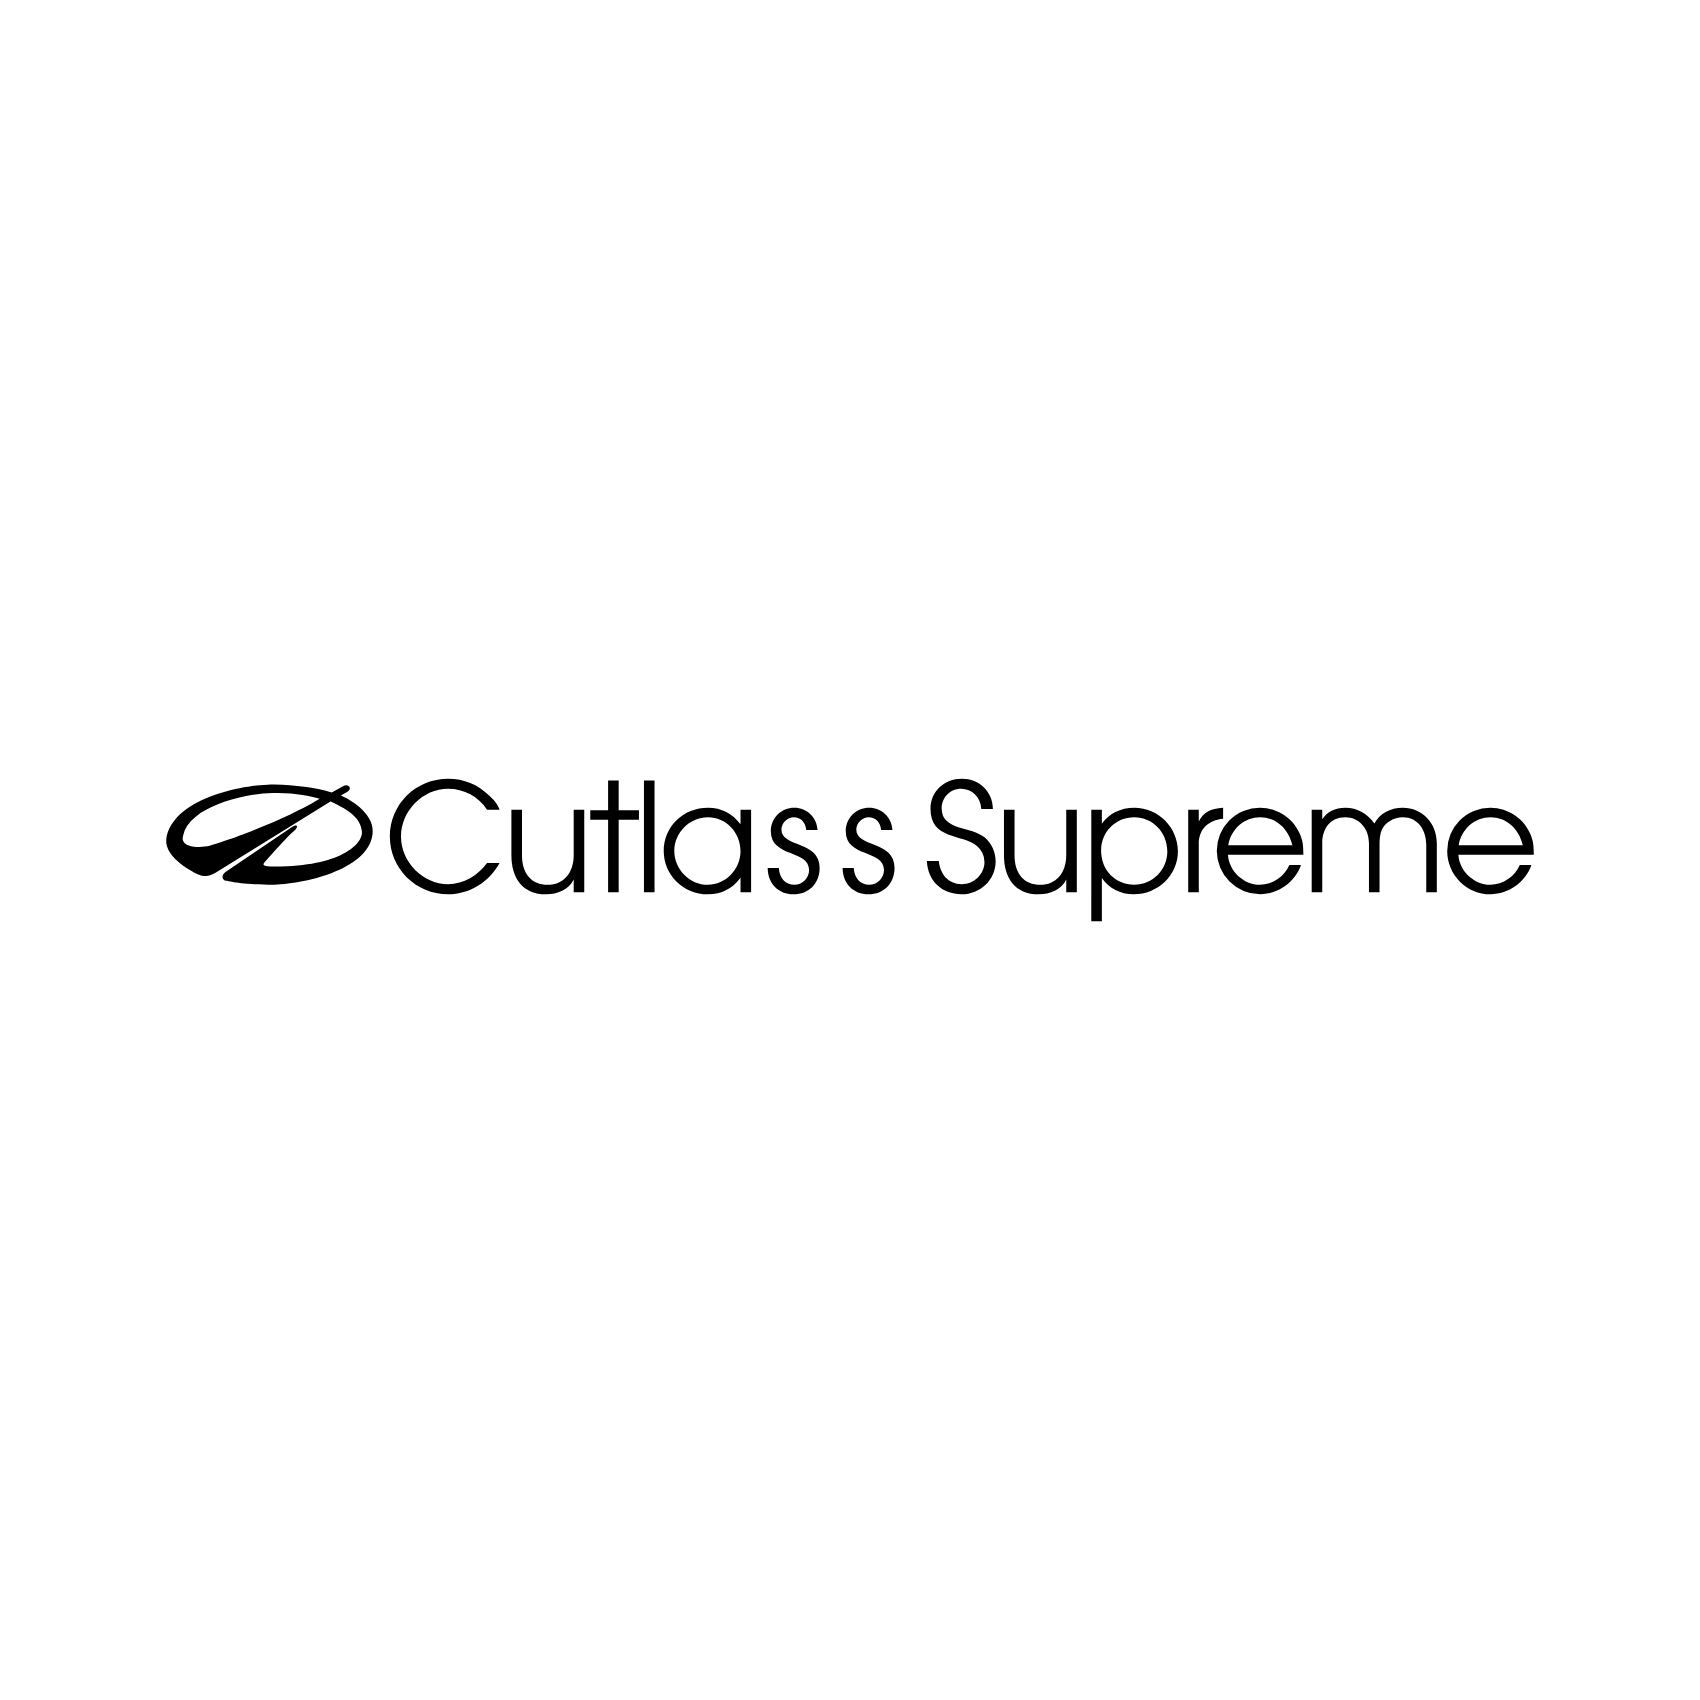 Cutlass Supreme Logo PNG Transparent & SVG Vector - Freebie Supply